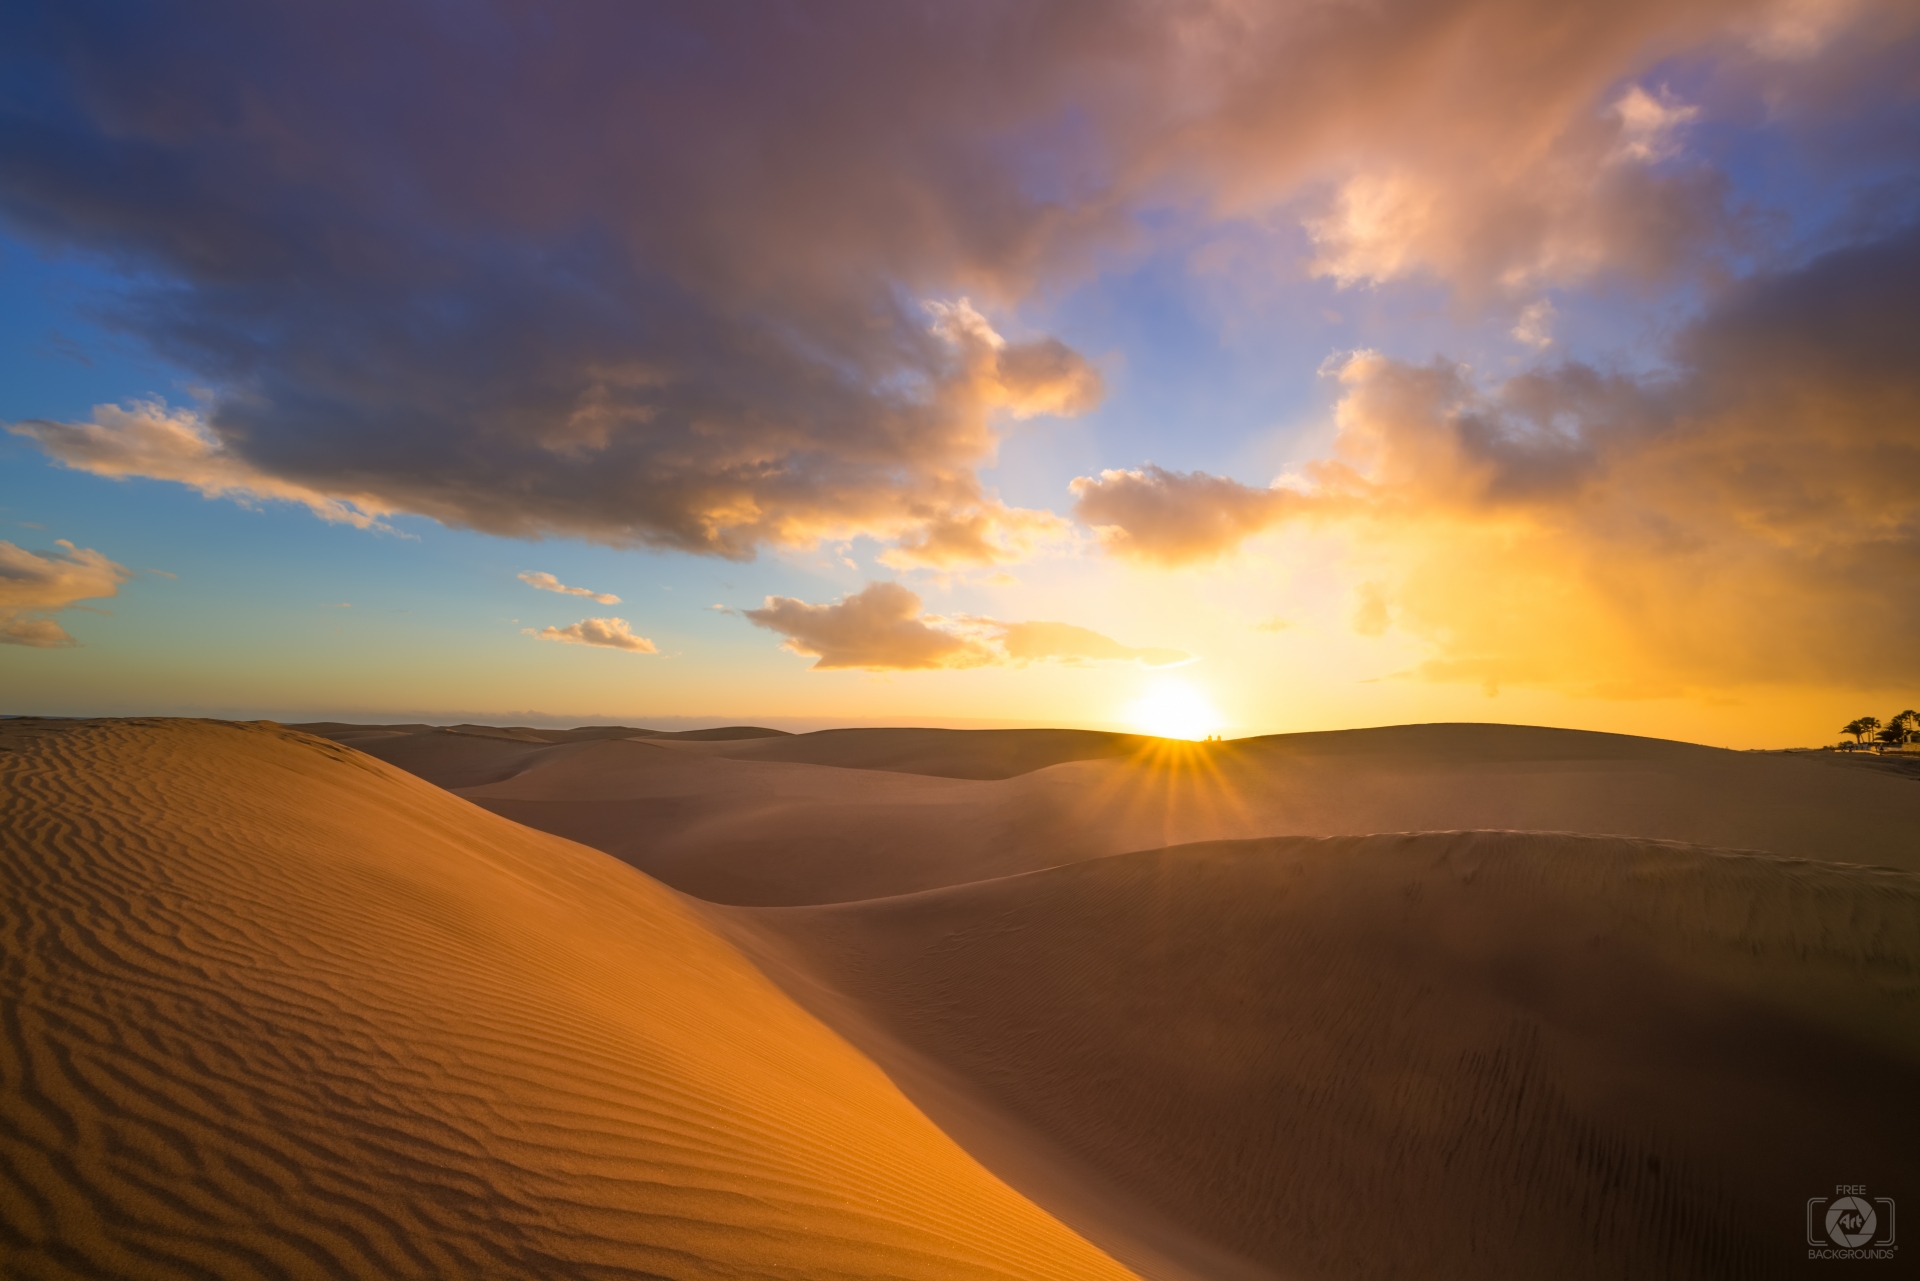 199100 Desert Sunset Stock Photos Pictures  RoyaltyFree Images   iStock  Sunset Desert Desert sunrise